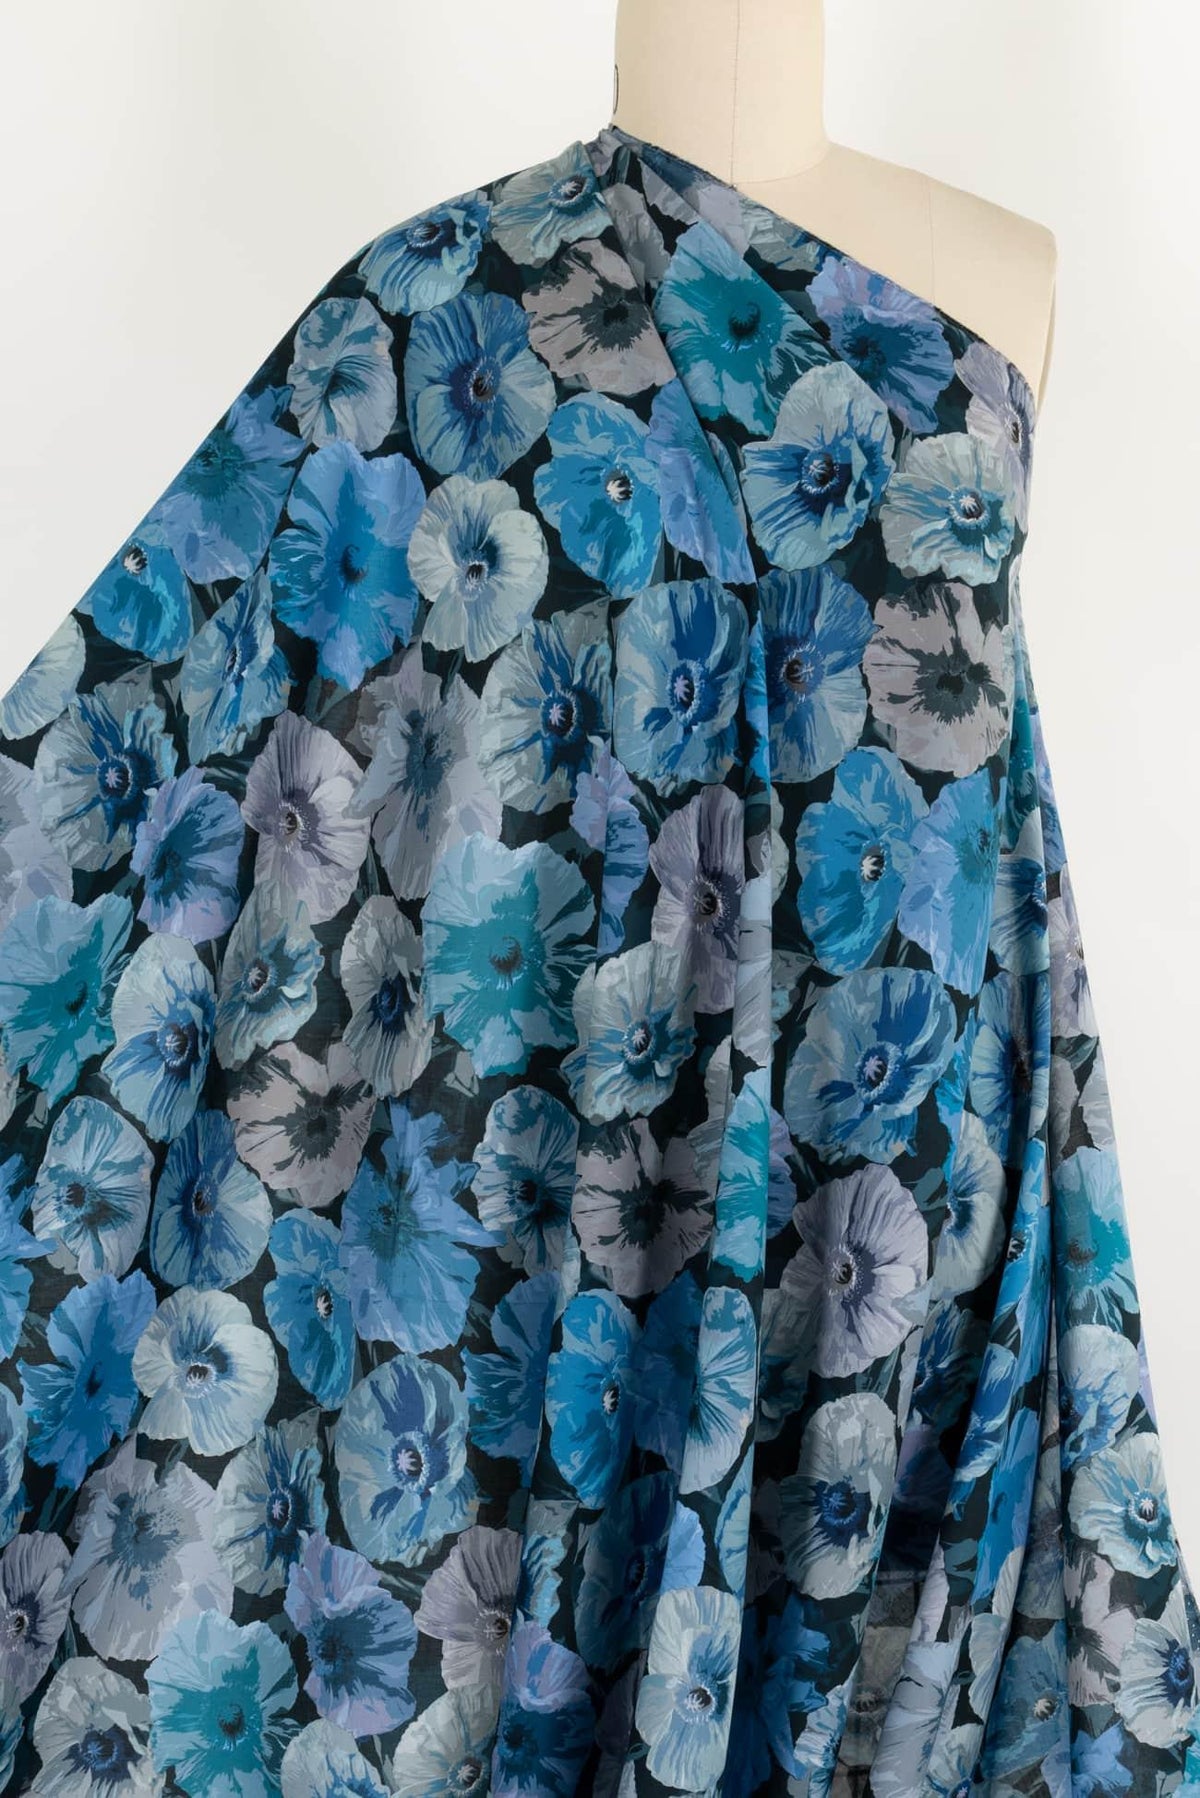 Nell Liberty Cotton Woven - Marcy Tilton Fabrics